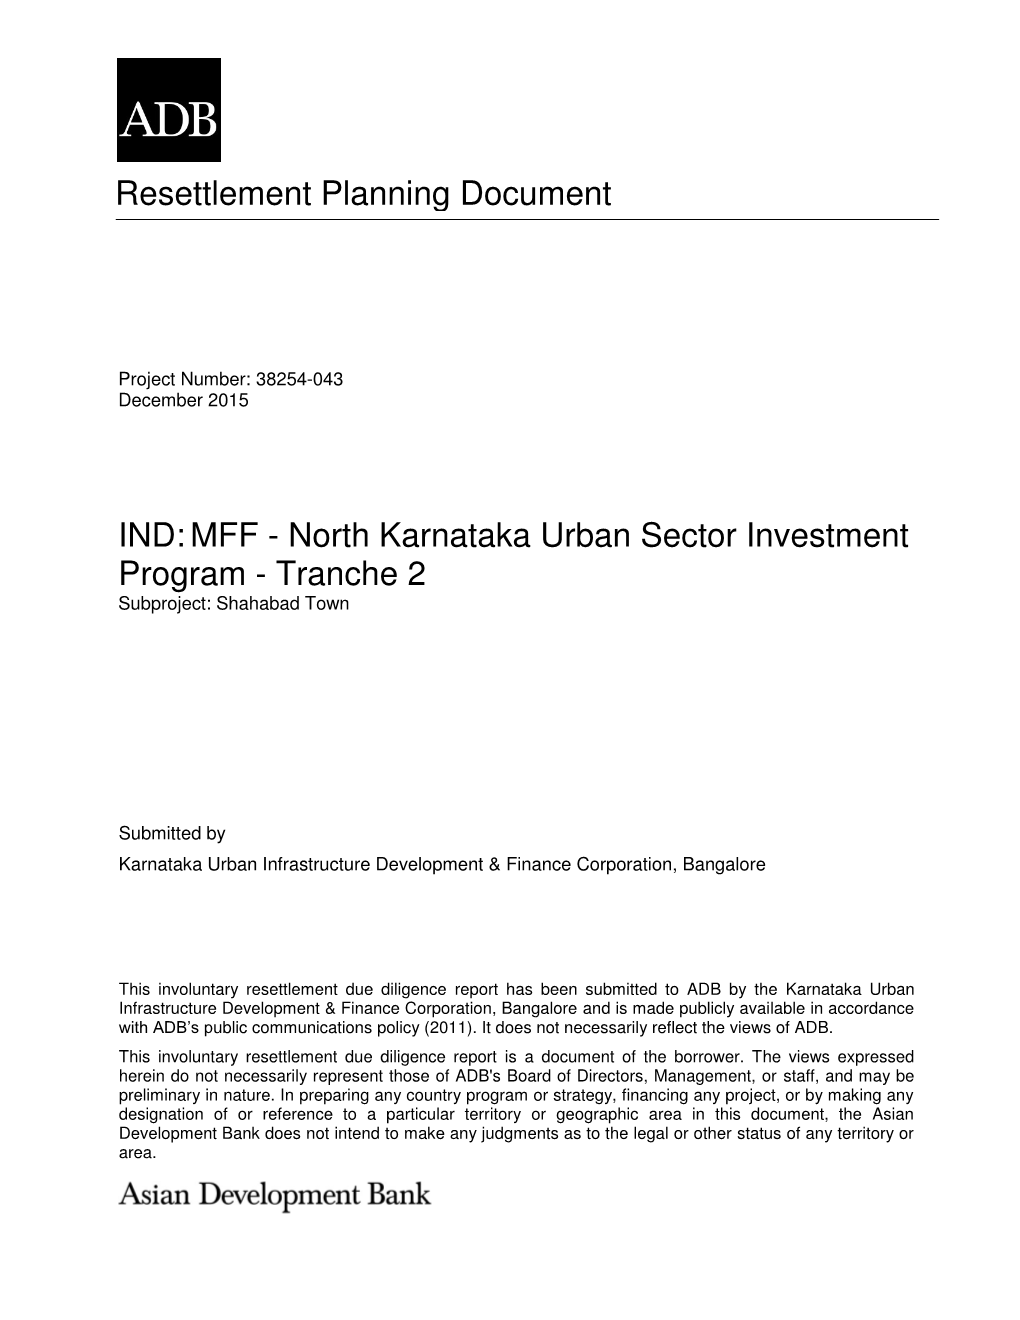 38254-043: North Karnataka Urban Sector Investment Program